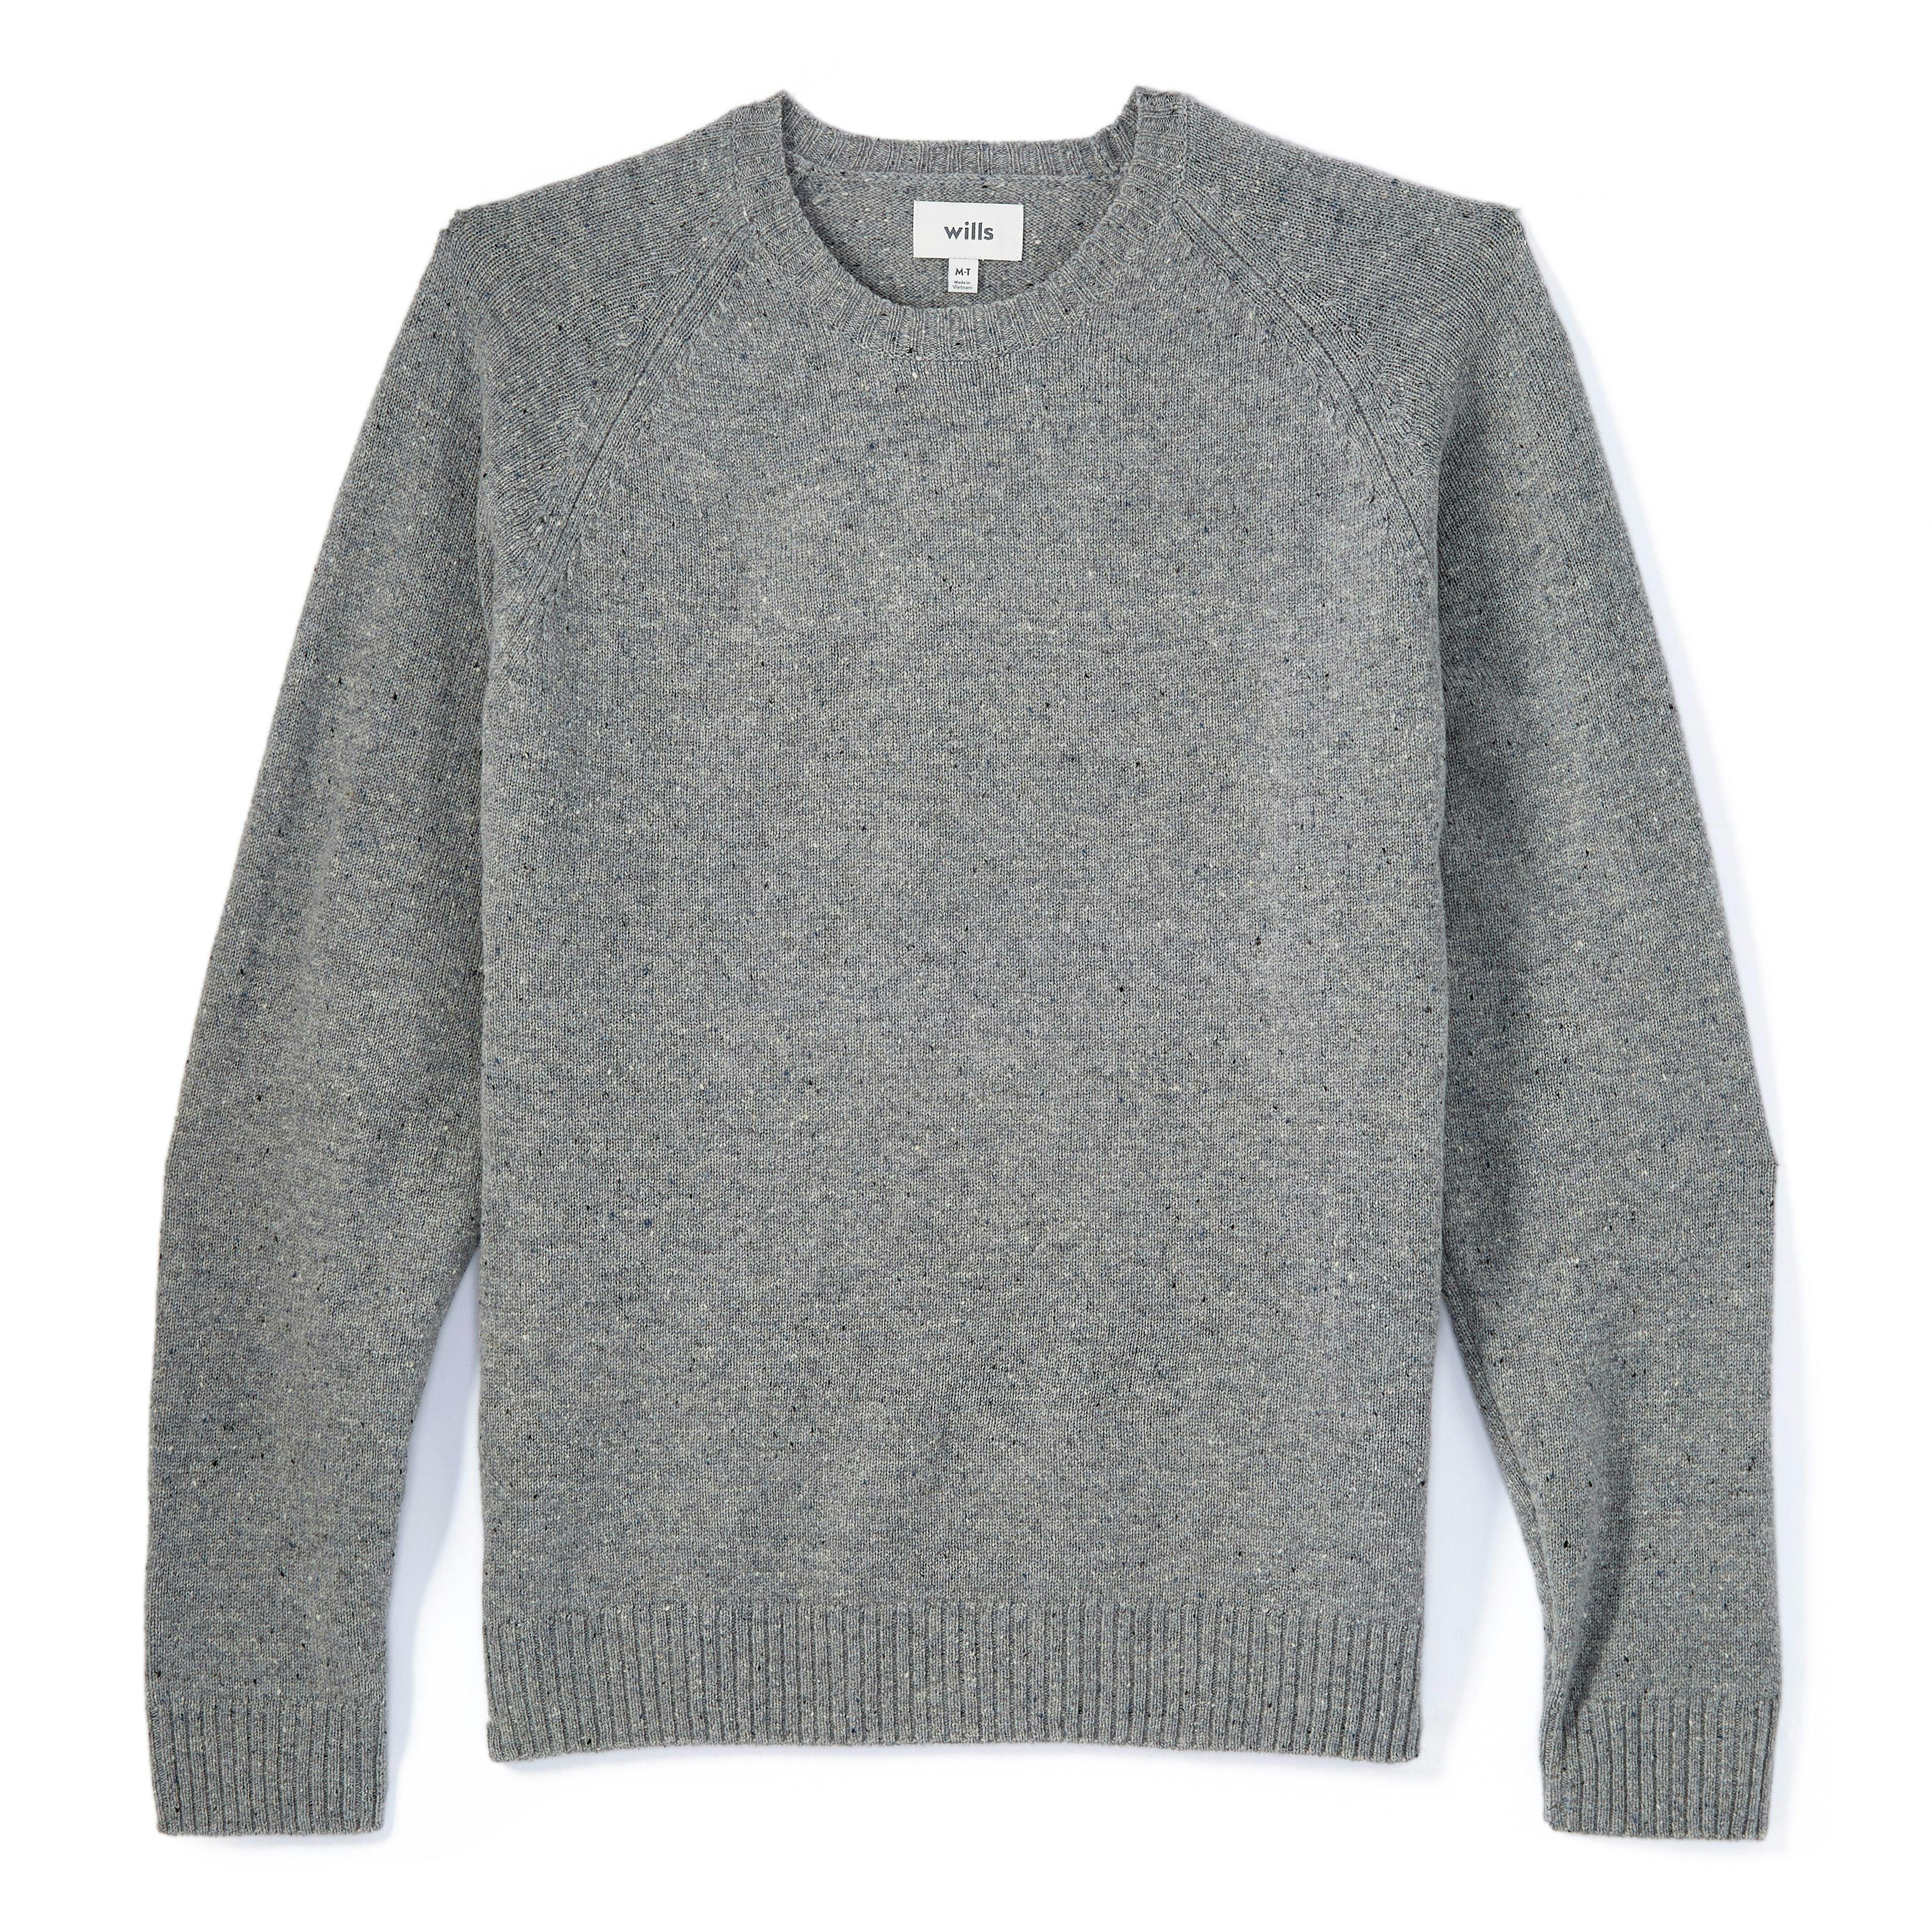 Speckled Merino Wool Crewneck Sweater - Tall